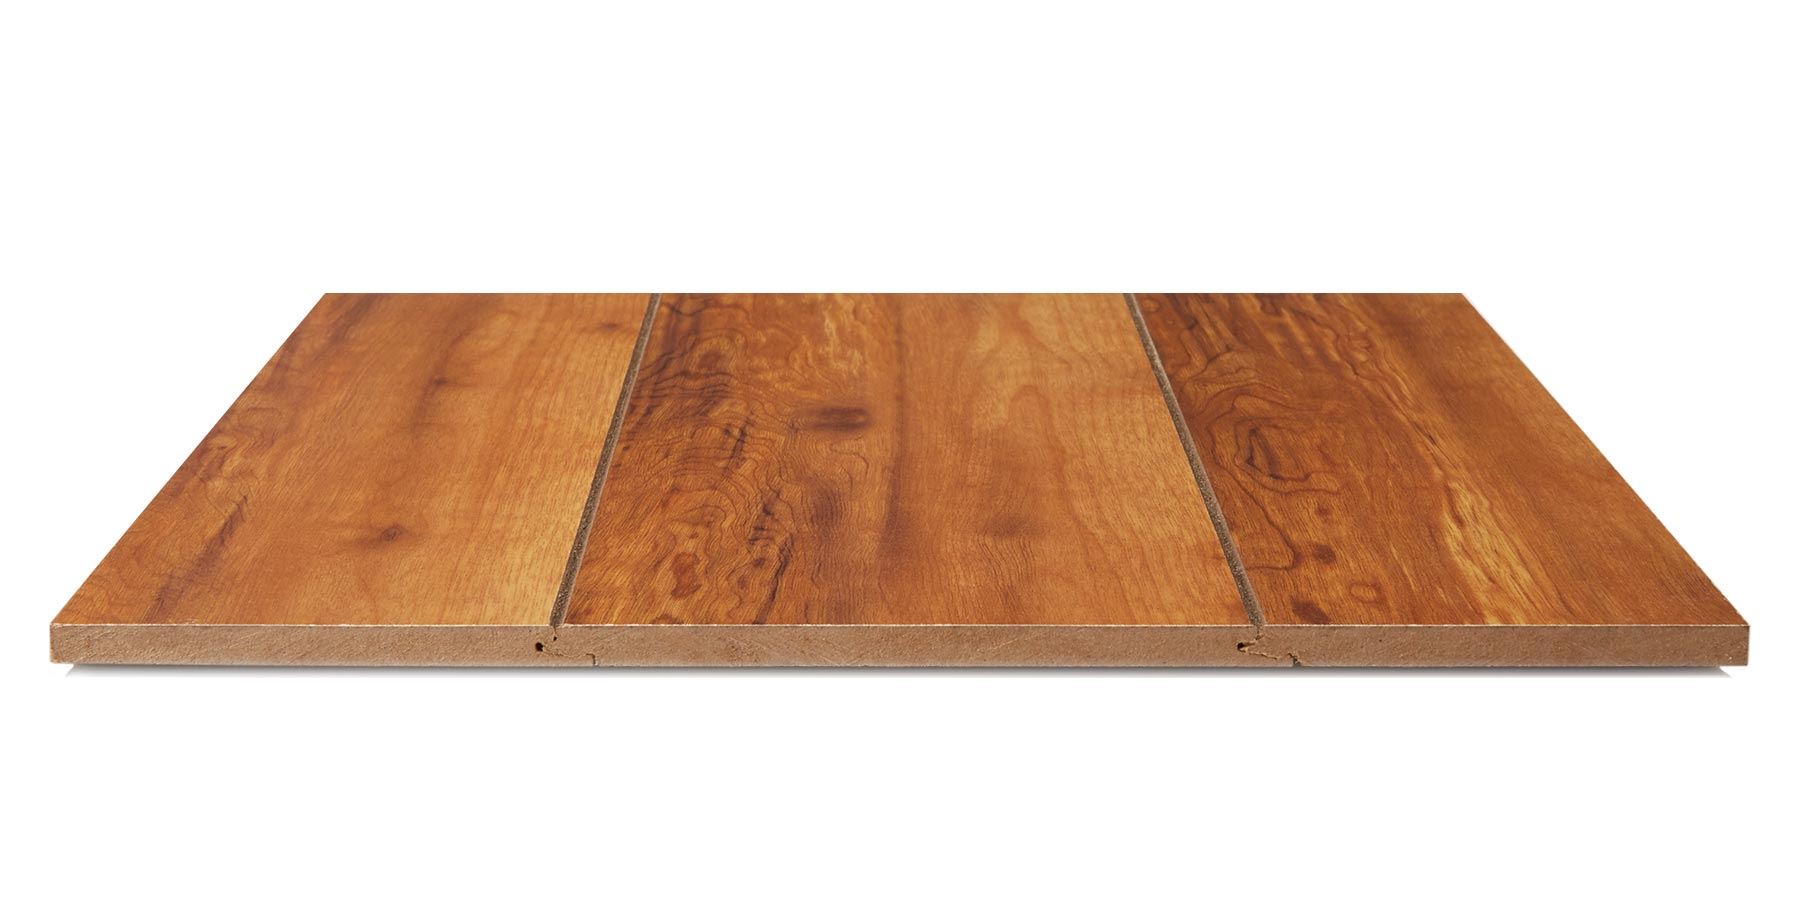 Parkview Wood Laminate Flooring